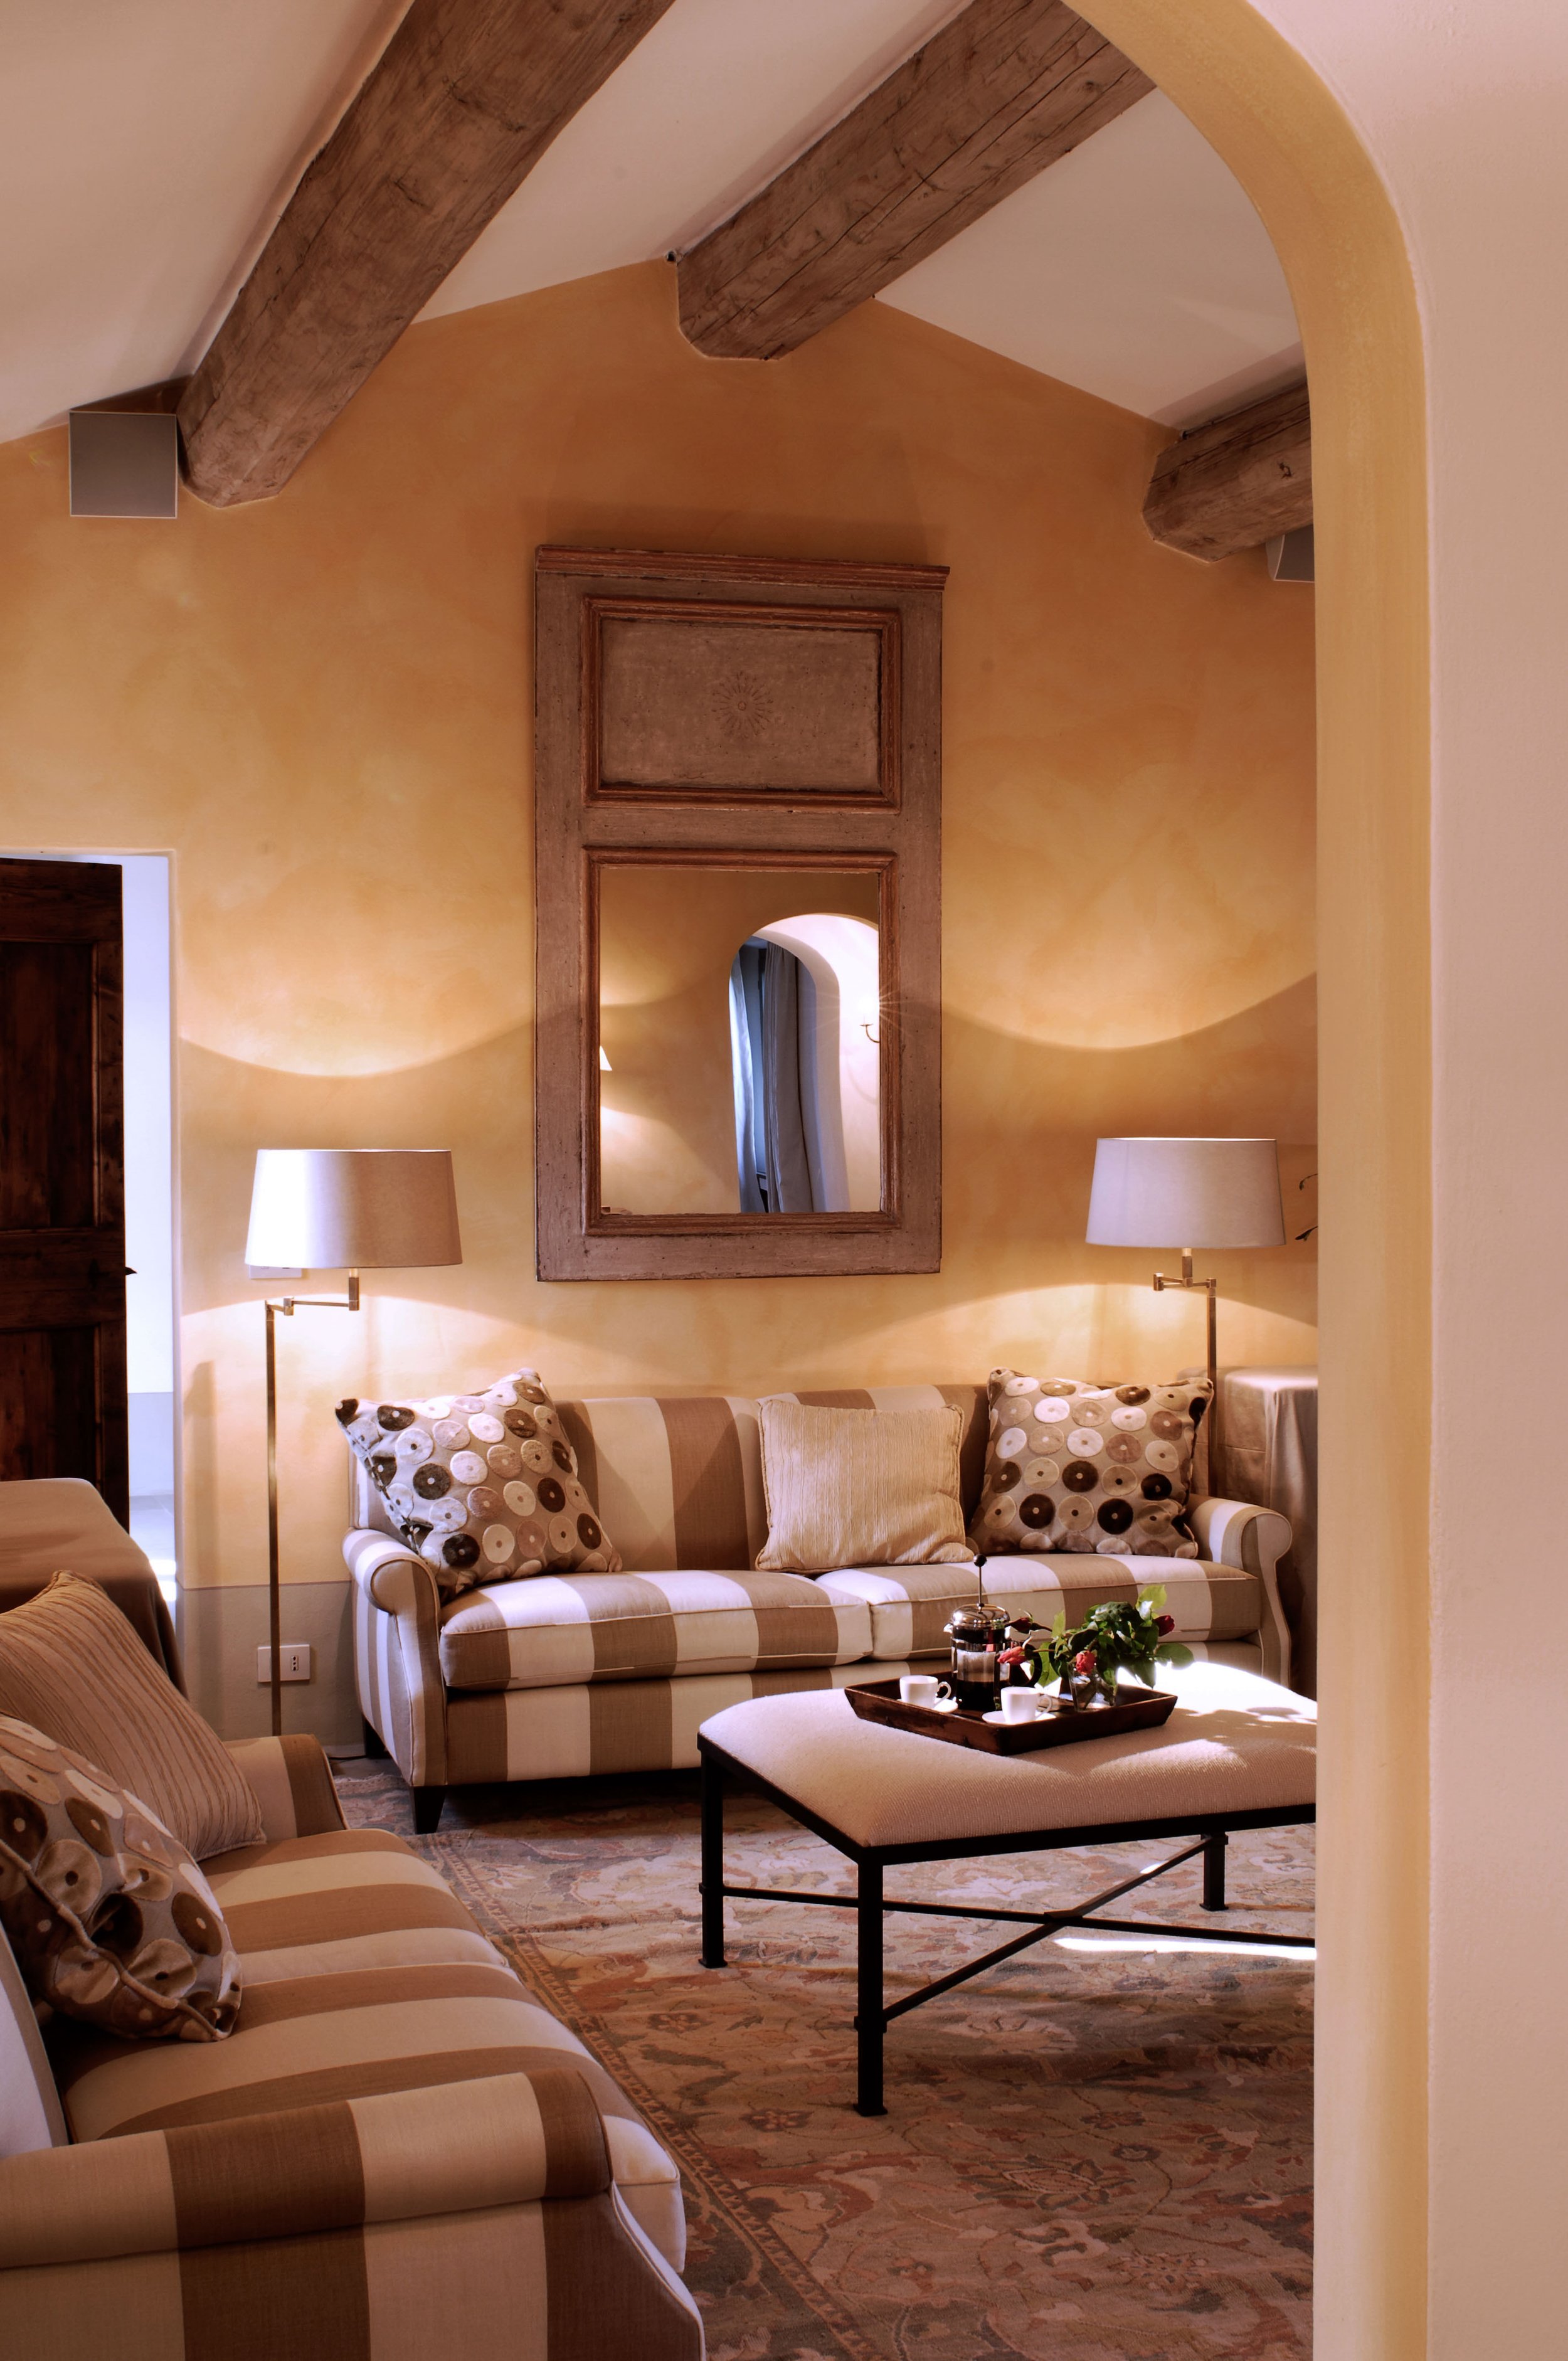 Francis York Exclusive Luxury Villa Rental in Umbria, Italy 12.jpg